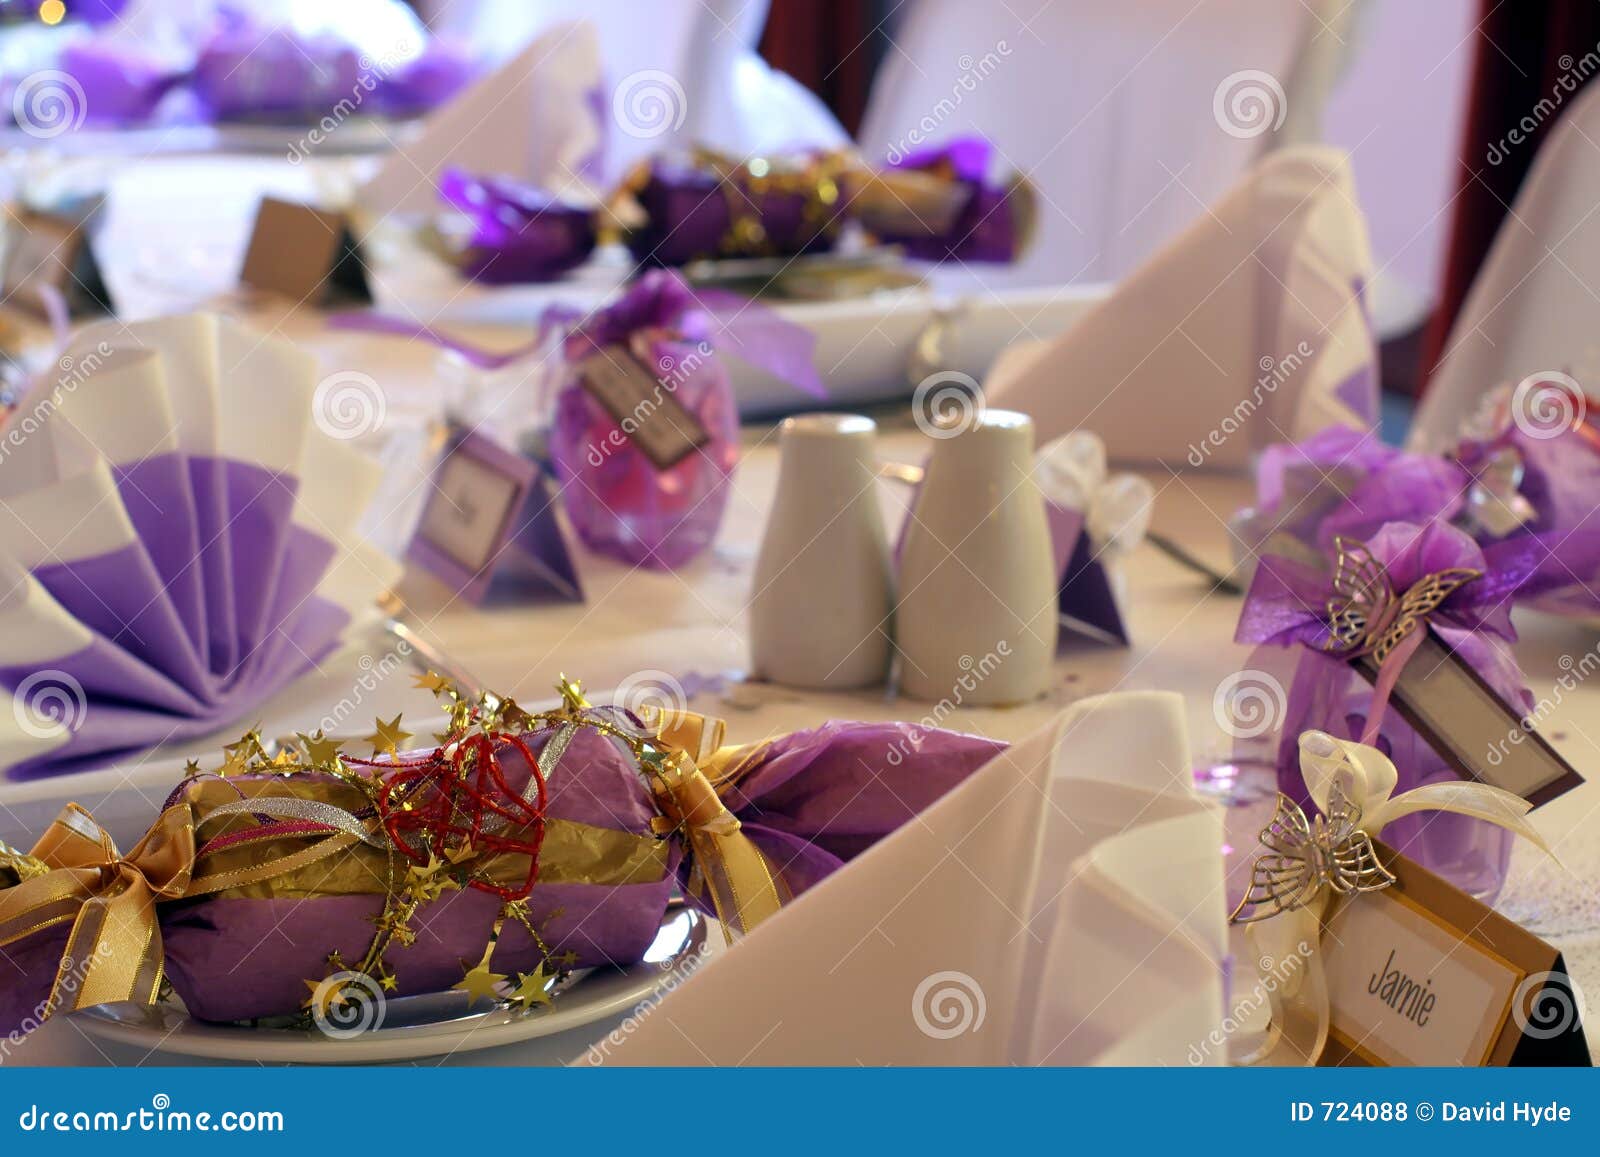 wedding or birthday table setting, landscape